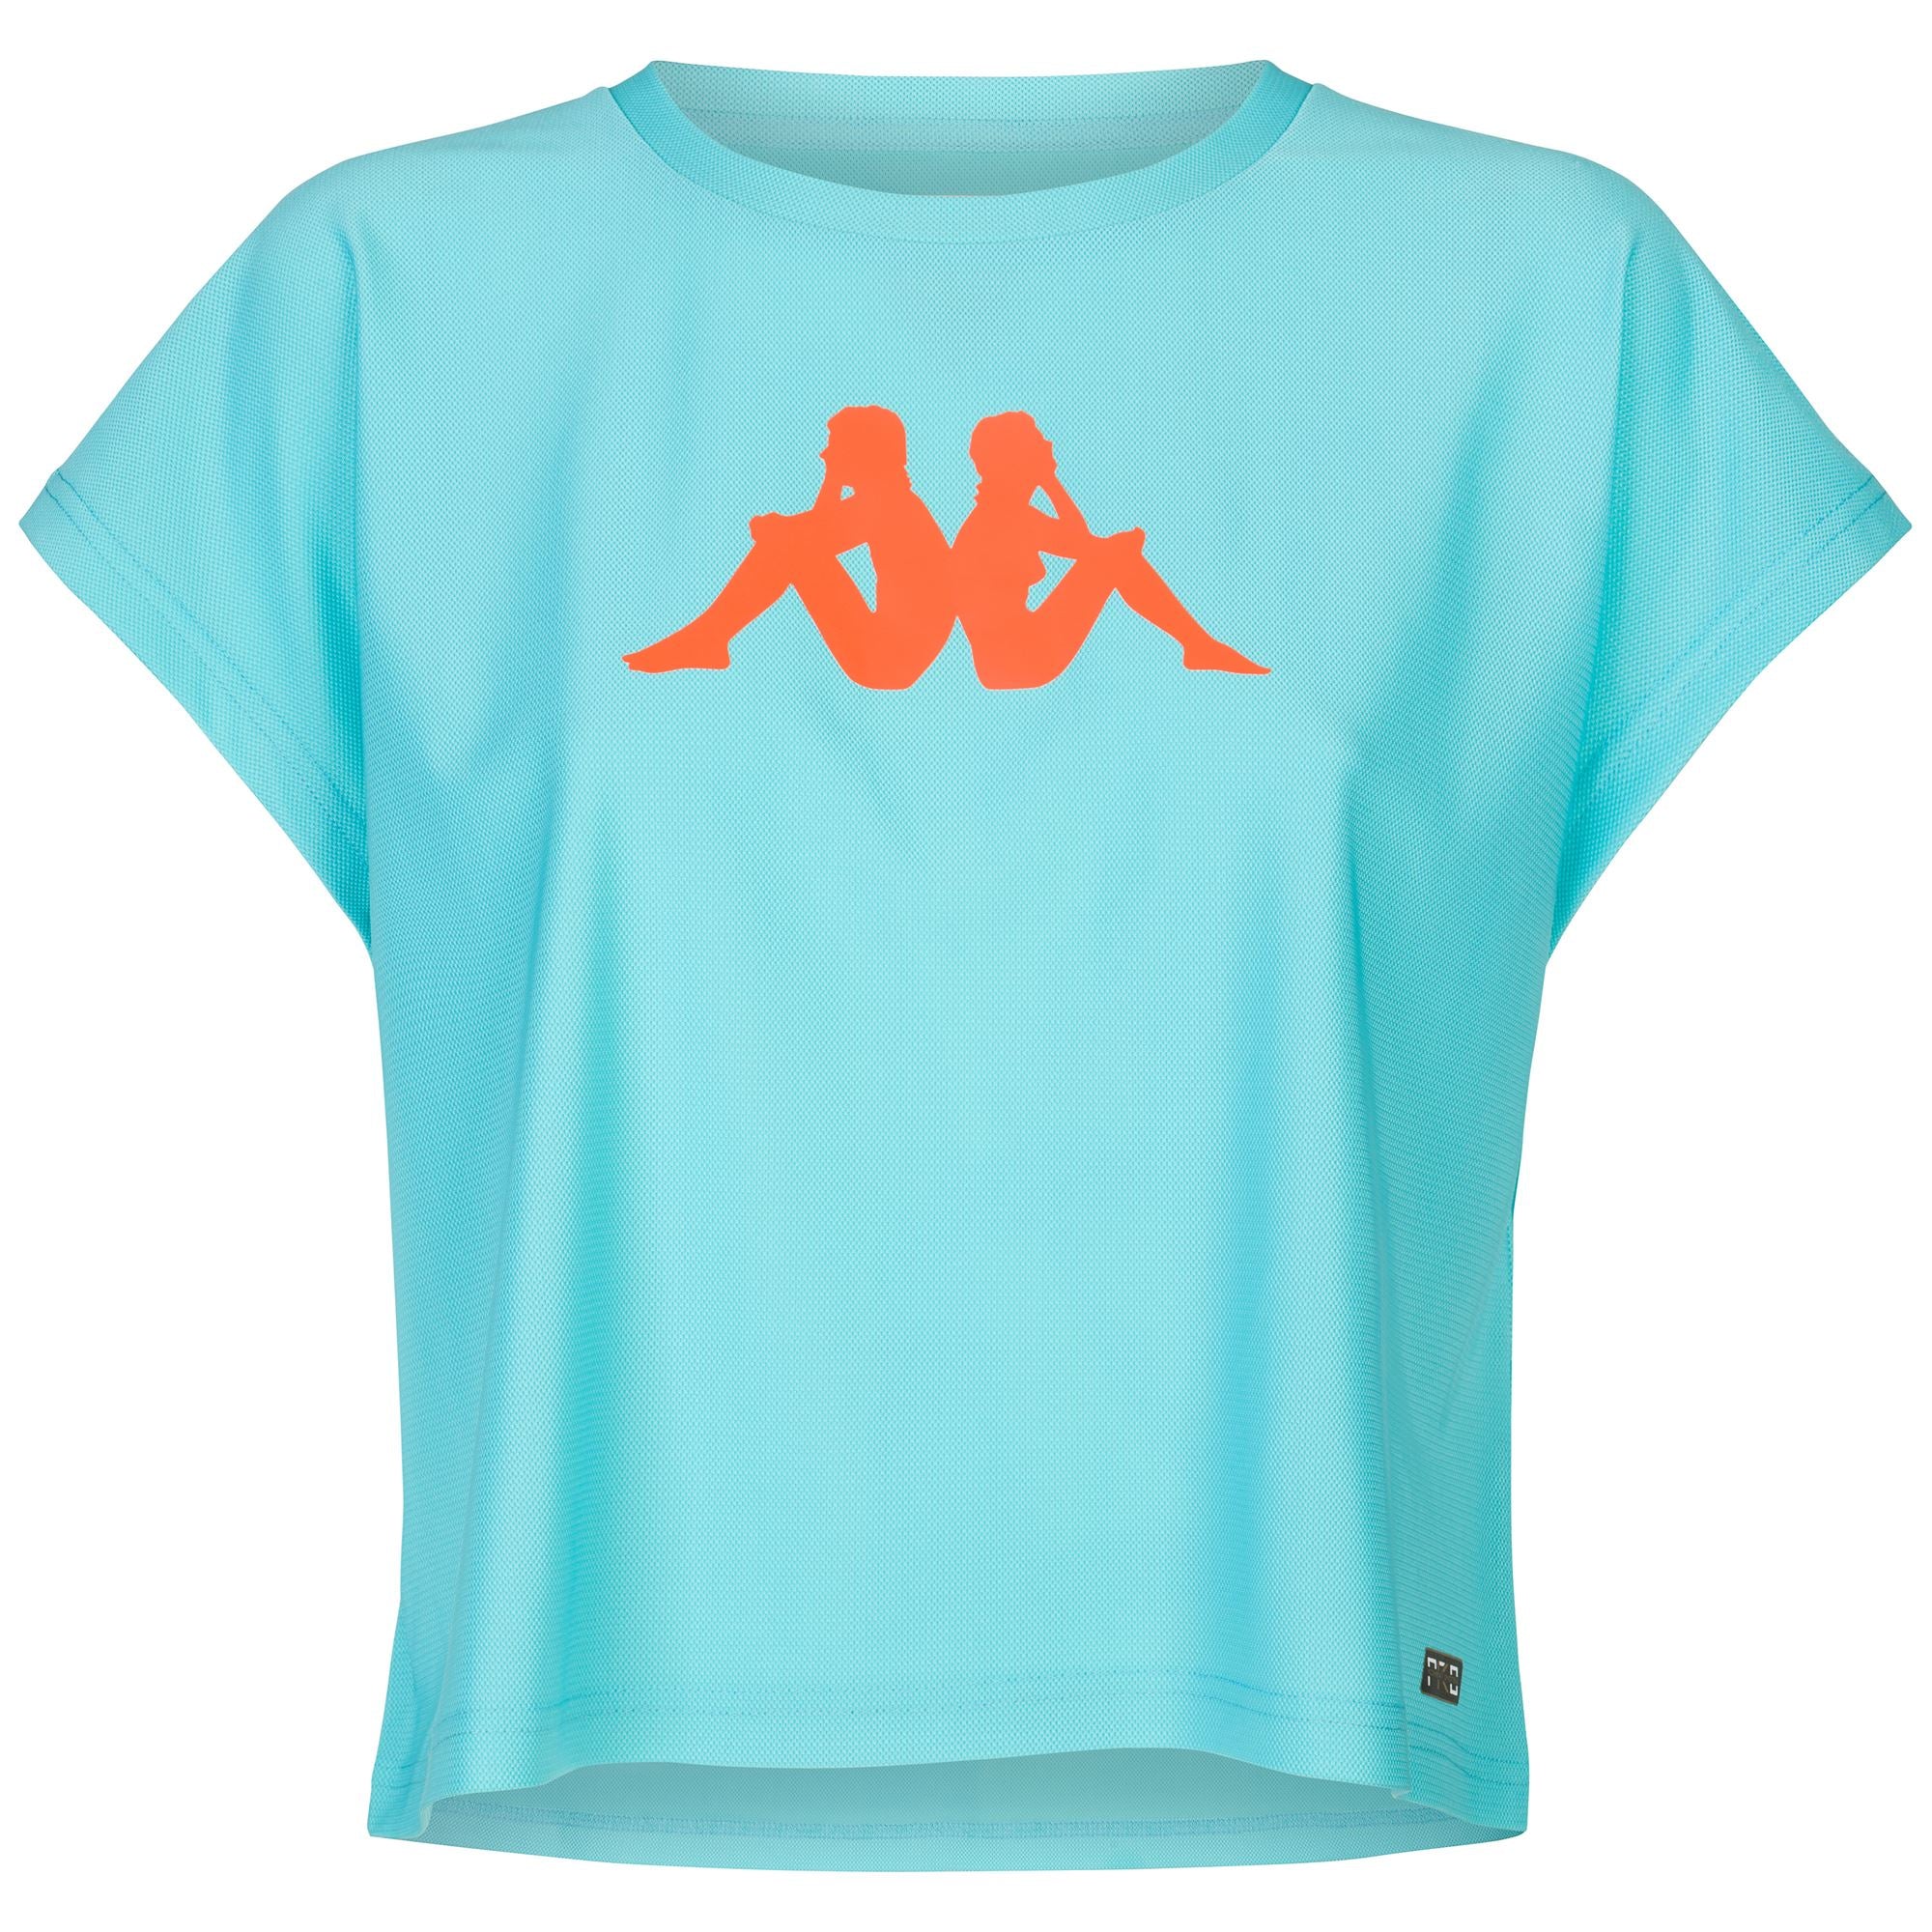 KOMBAT CREWY - T-ShirtsTop - T-Shirt - Woman - TURQUOISE FAIRY-ORANGE  POPSICLE